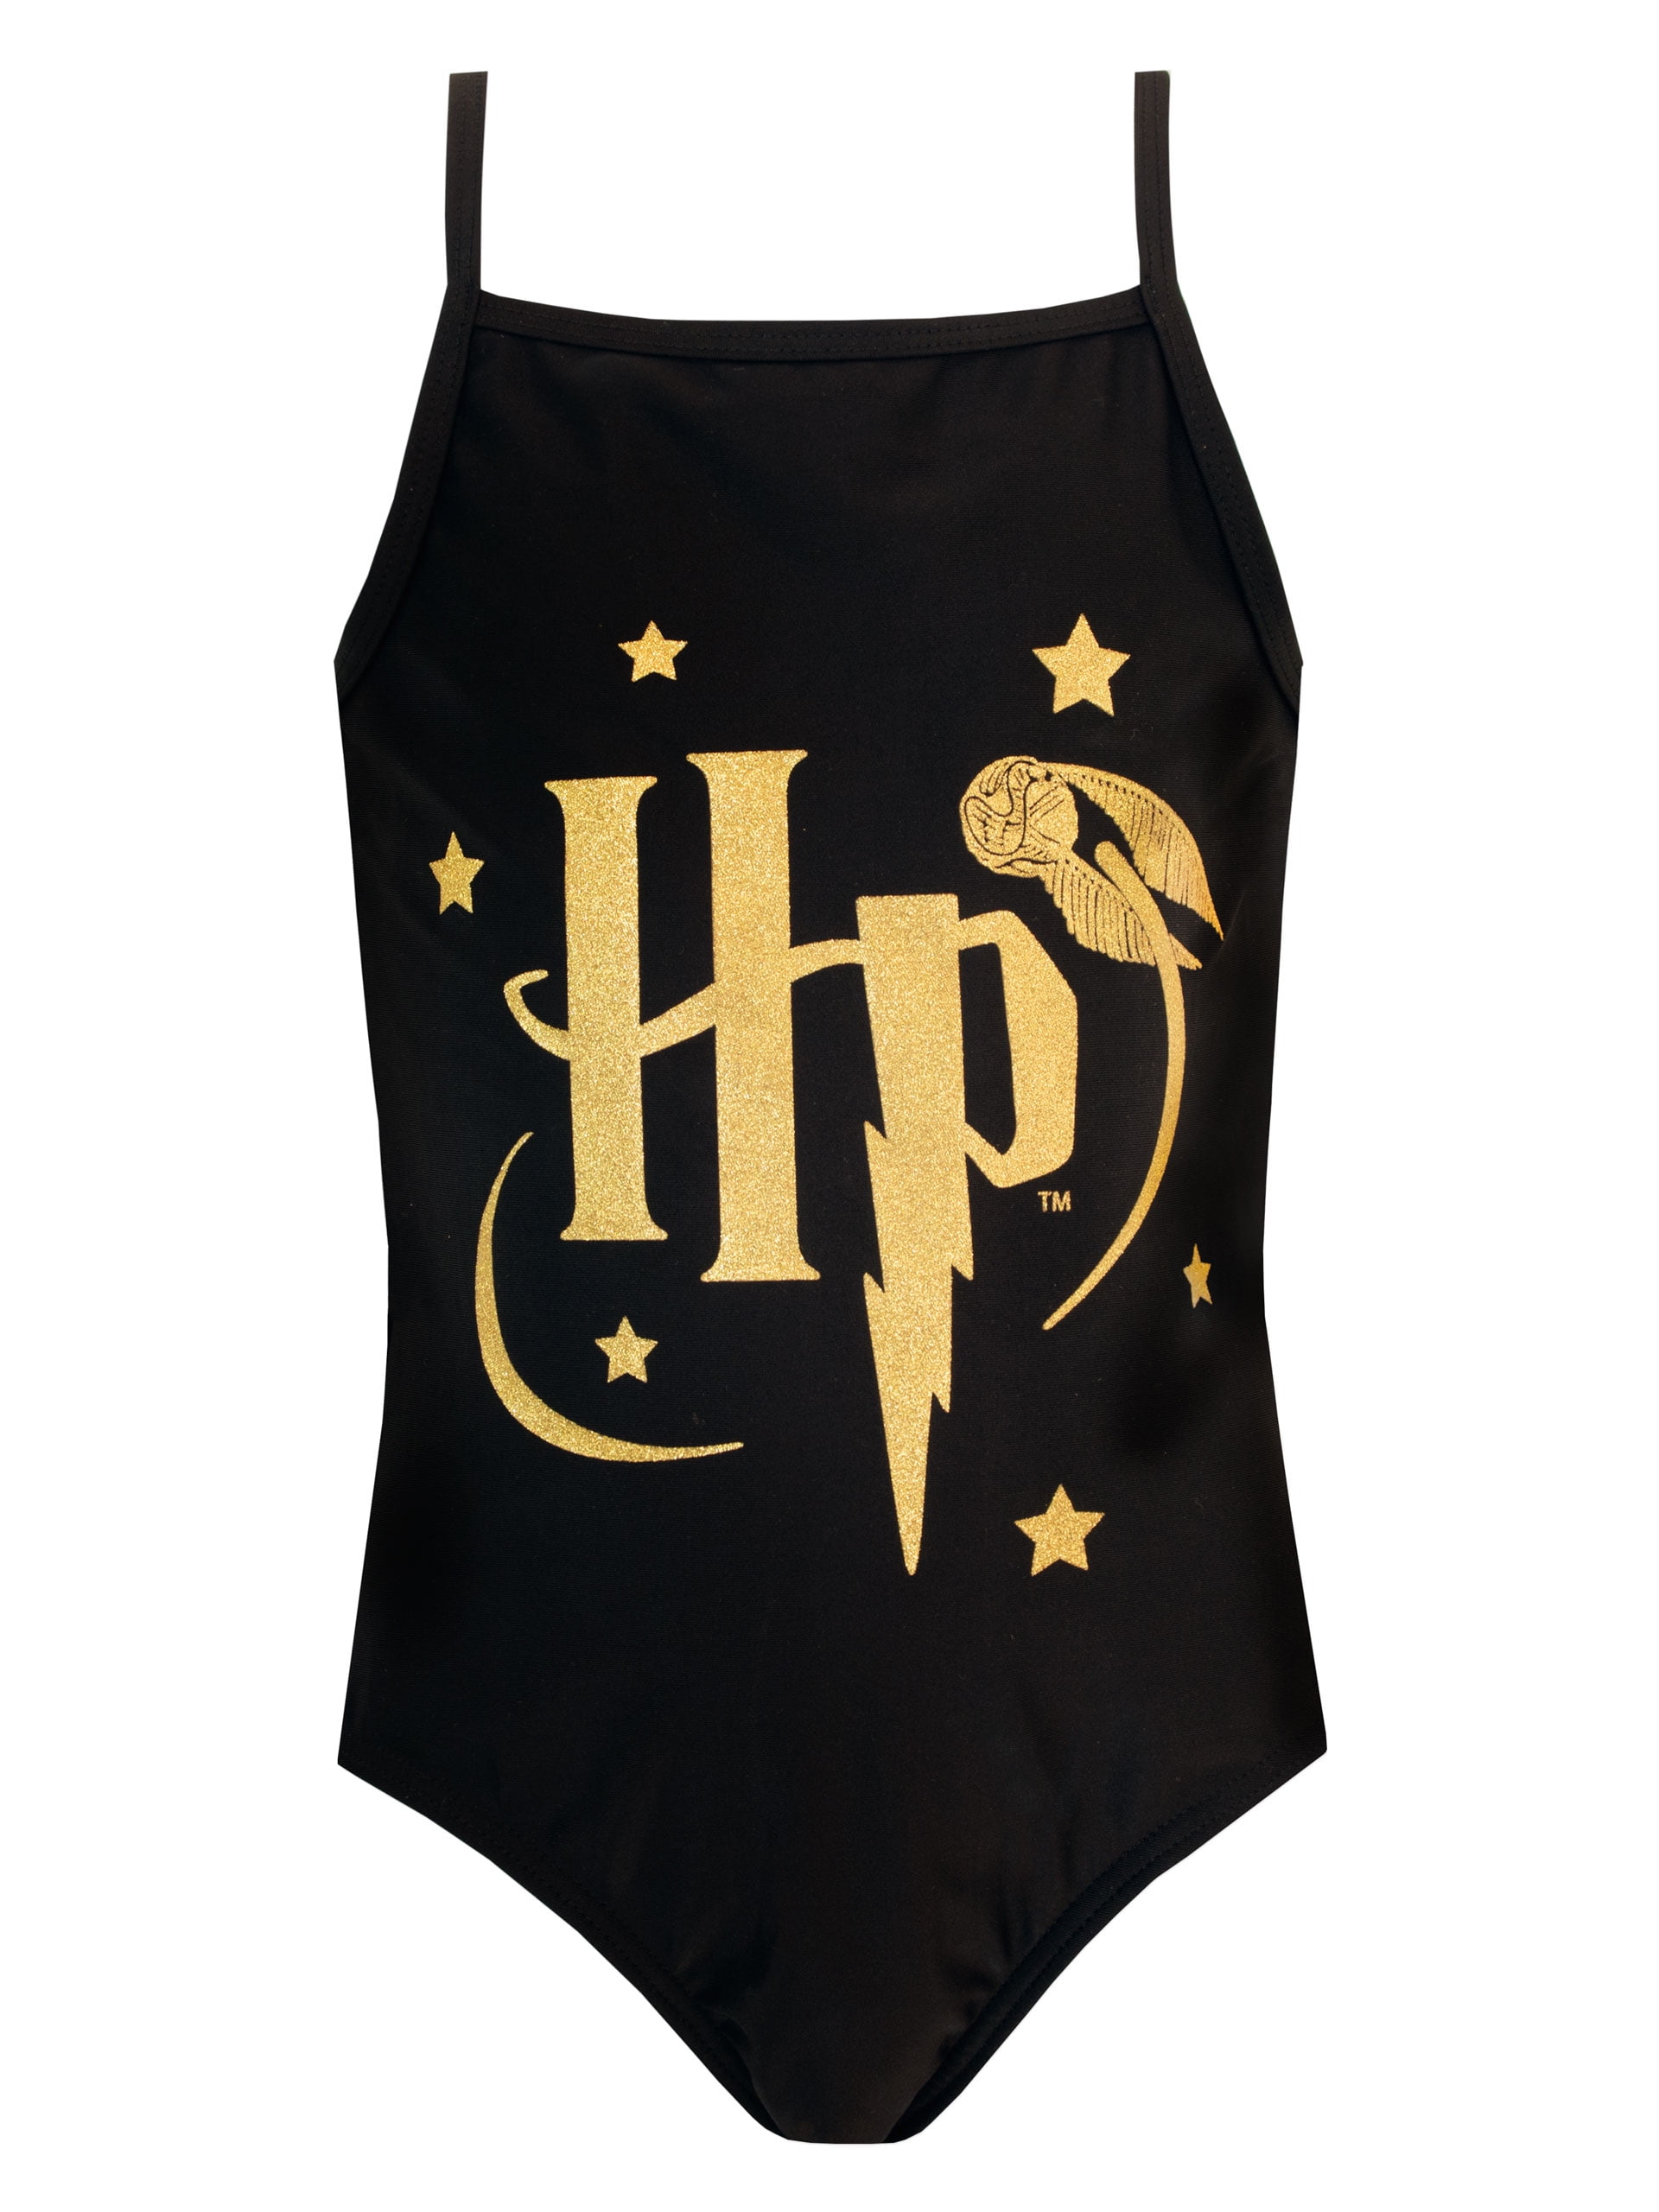 Harry Potter Girls Swimsuit Sizes 6 - 14 - Walmart.com